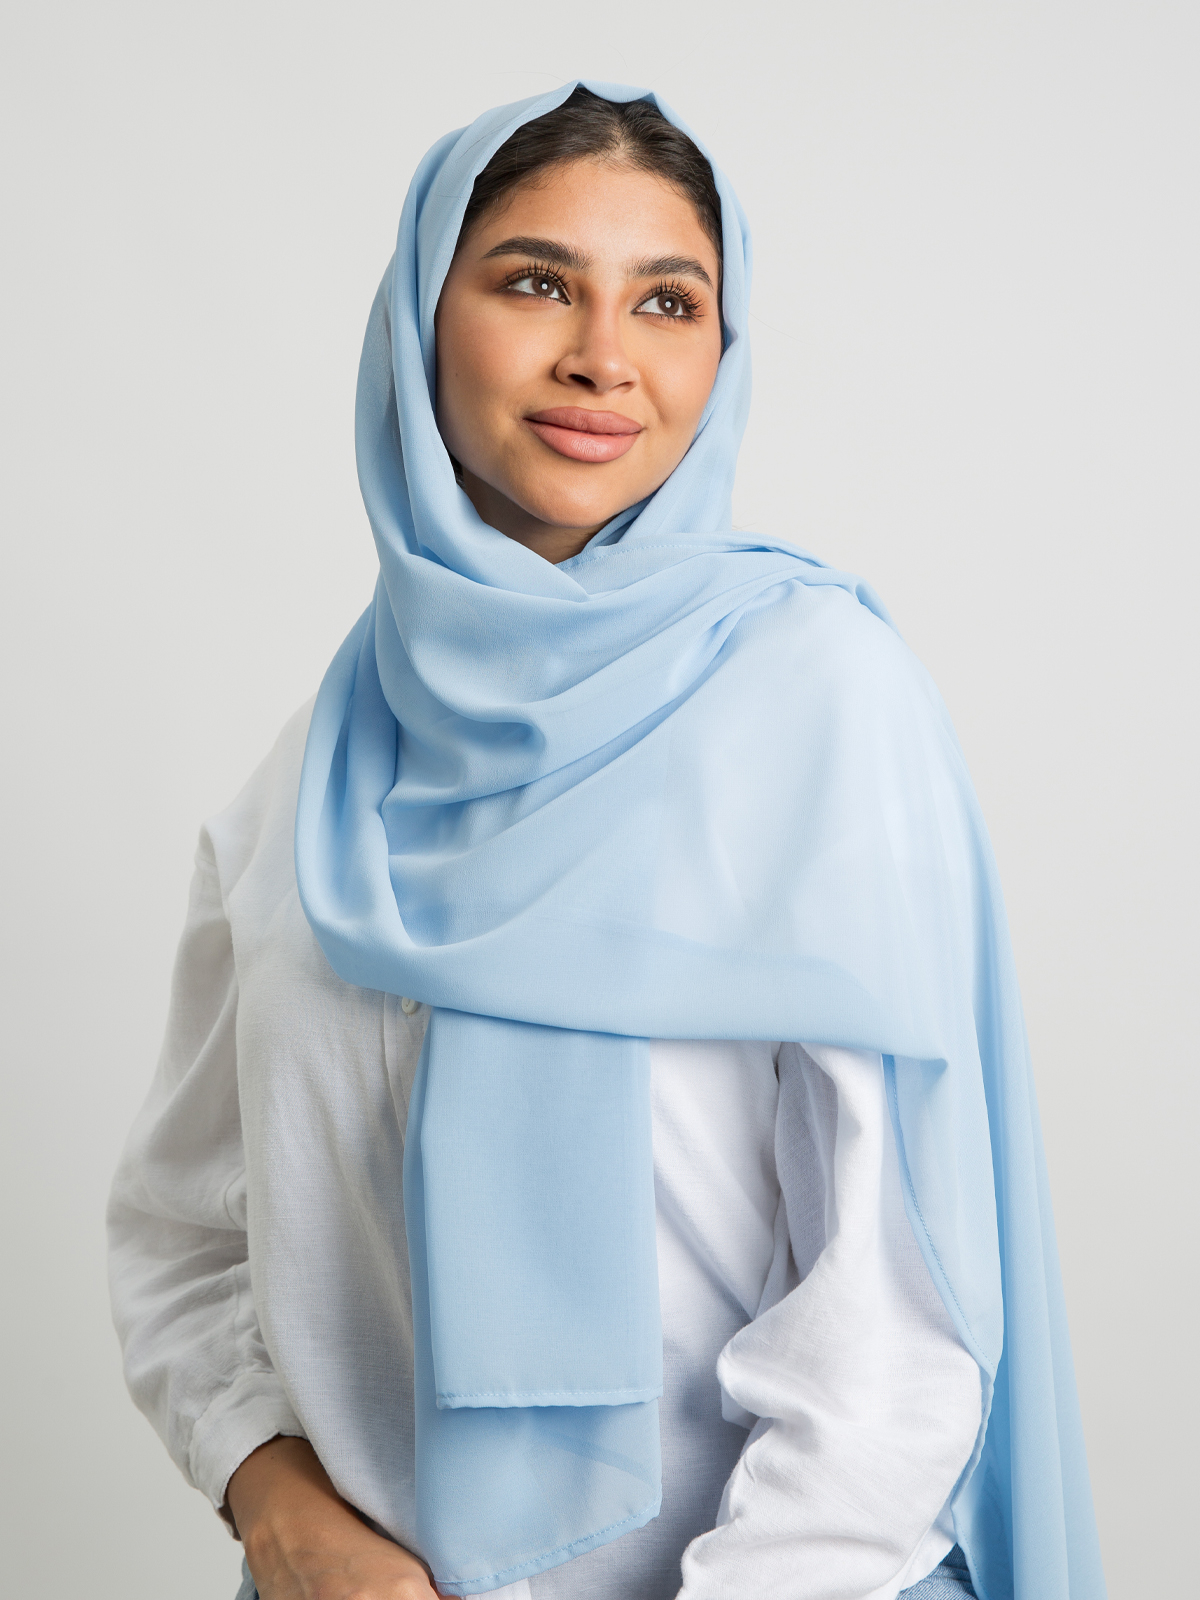 Sky blue plain light chiffon tarha by kaafmeem hijab for daily wear available in multiple colors